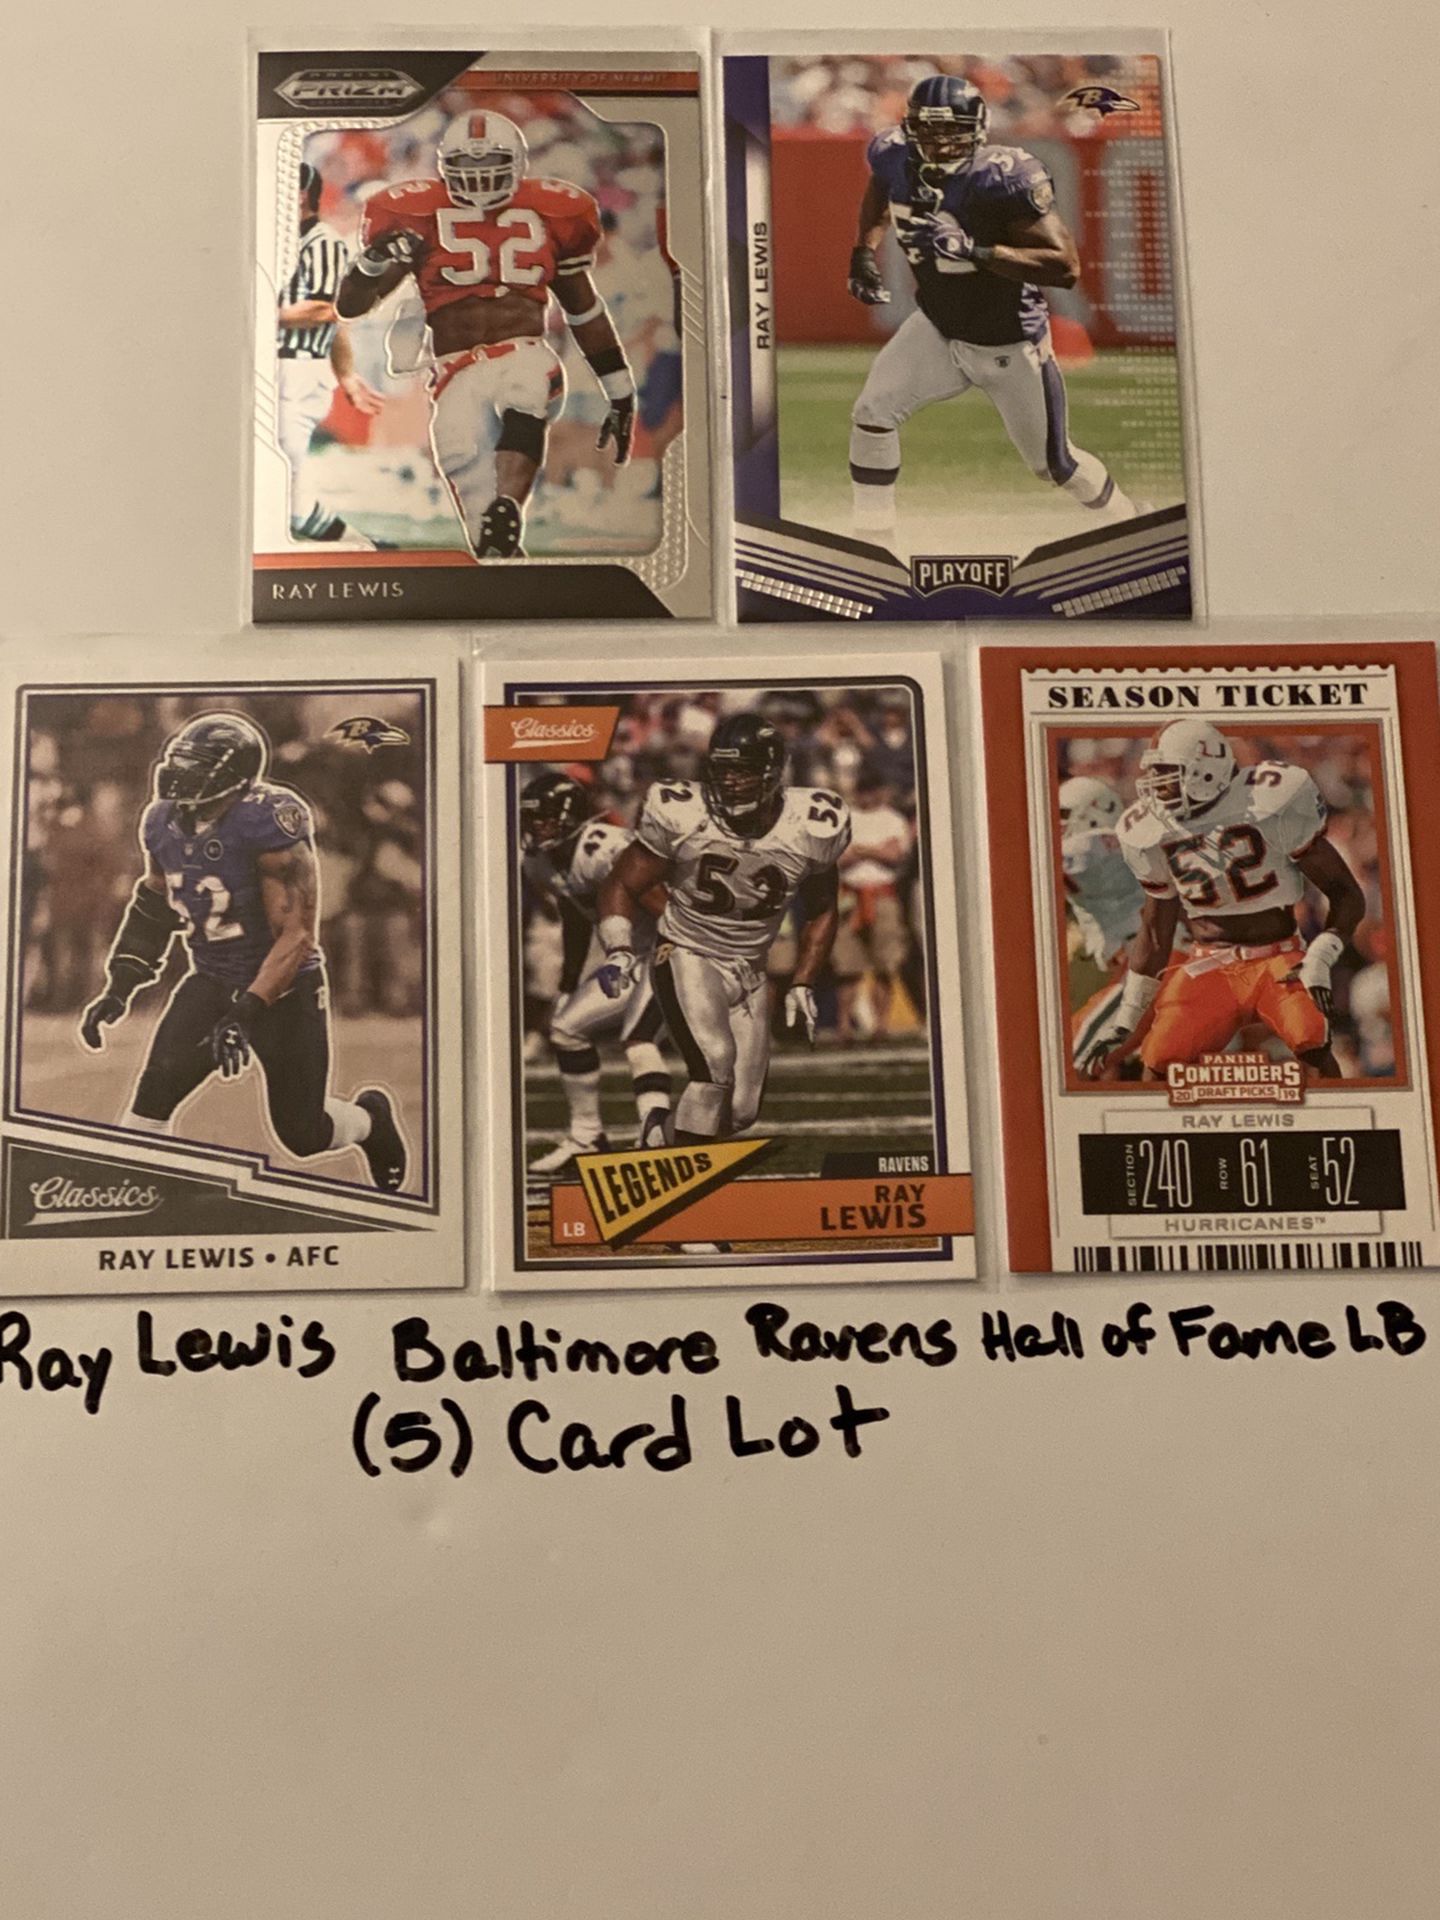 Ray Lewis Baltimore Ravens Hall of Fame LB (5) Card Lot.